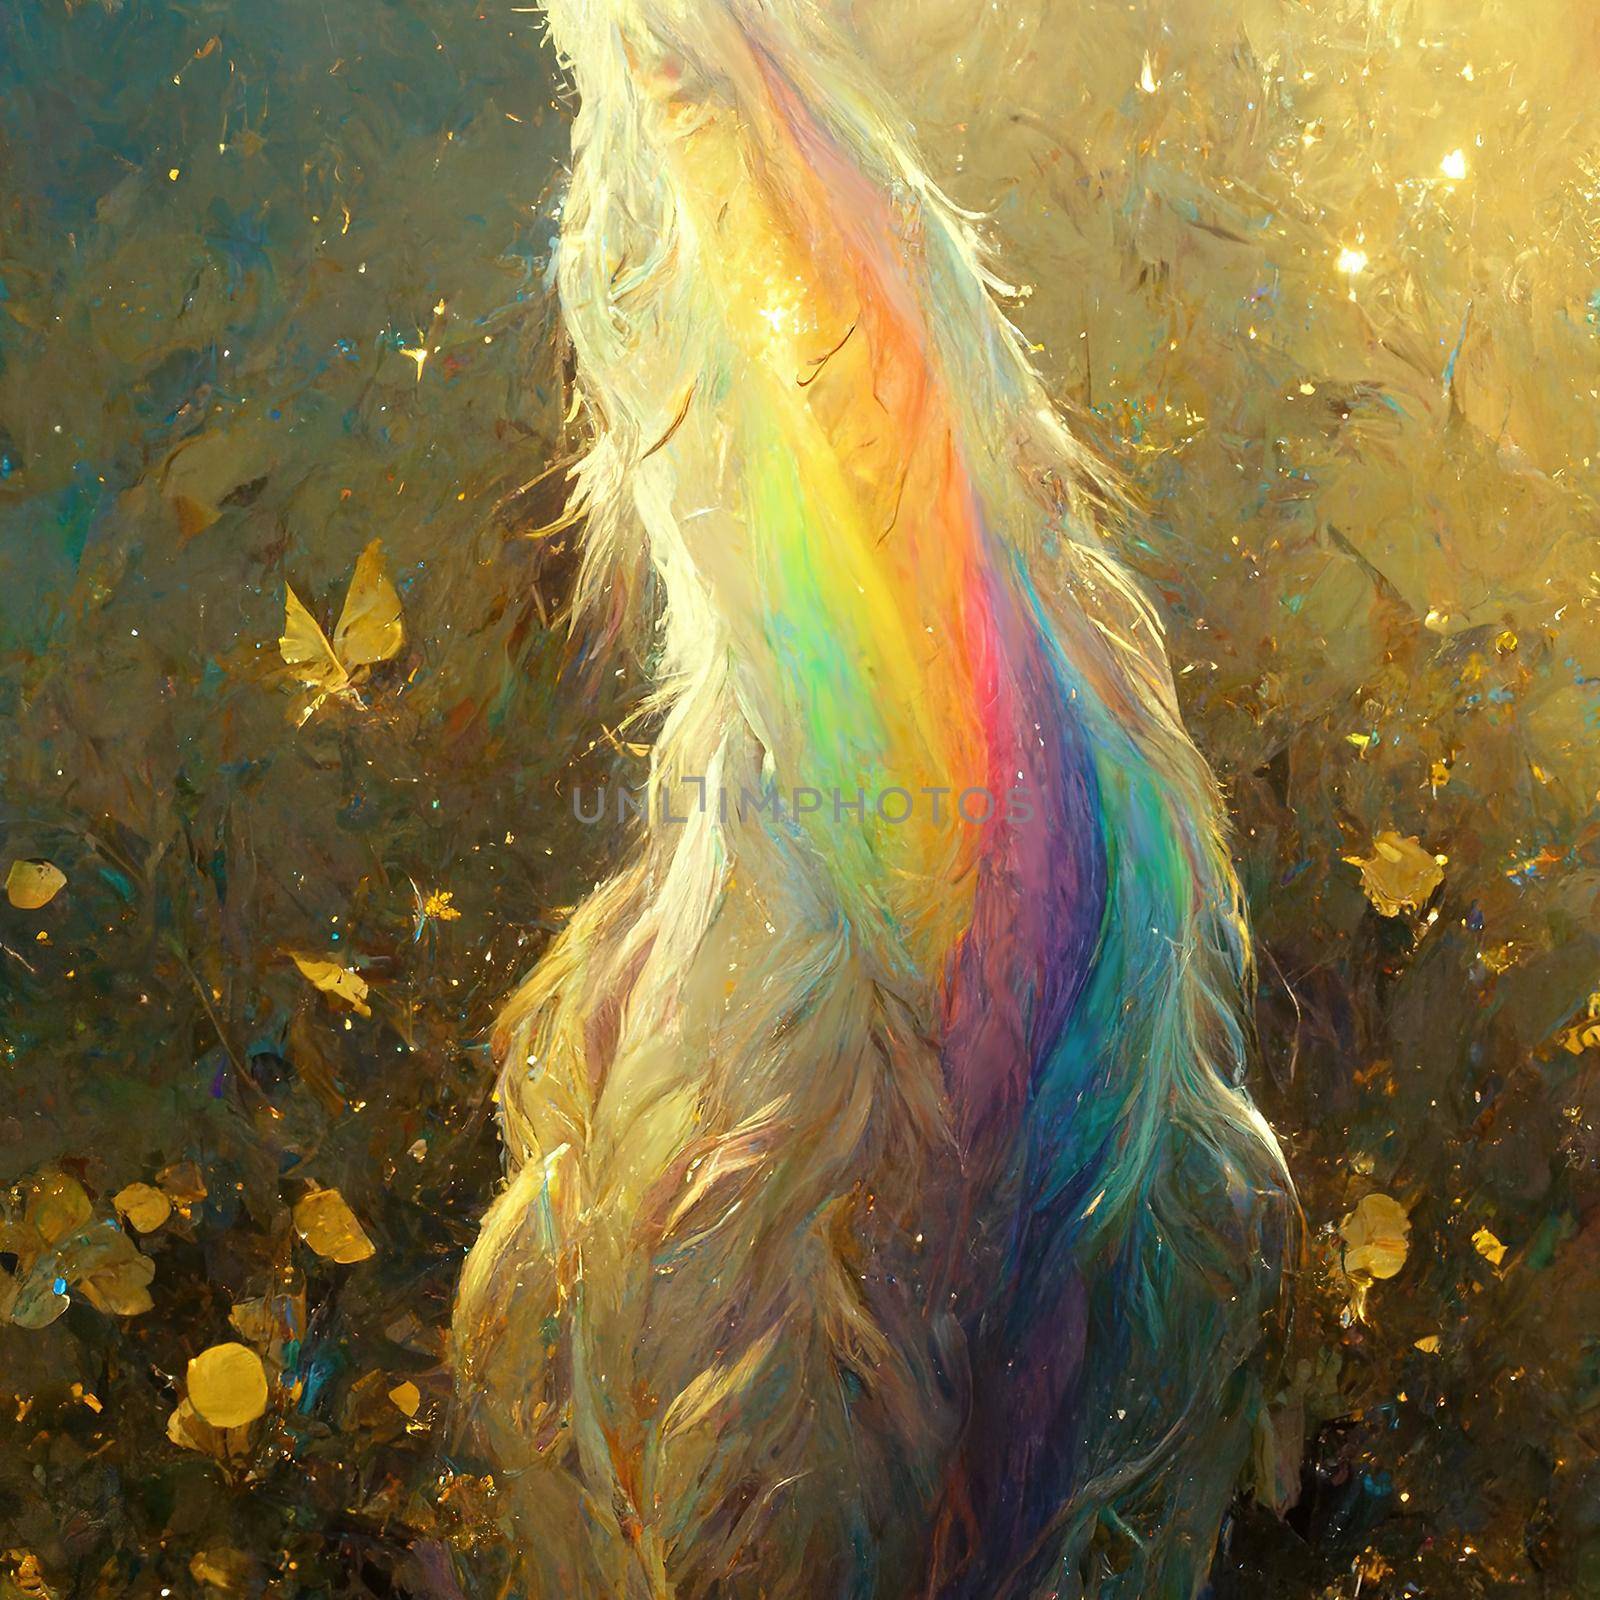 Rainbow in Unicorn tail, Colorful Digital art Illustration by macroarting